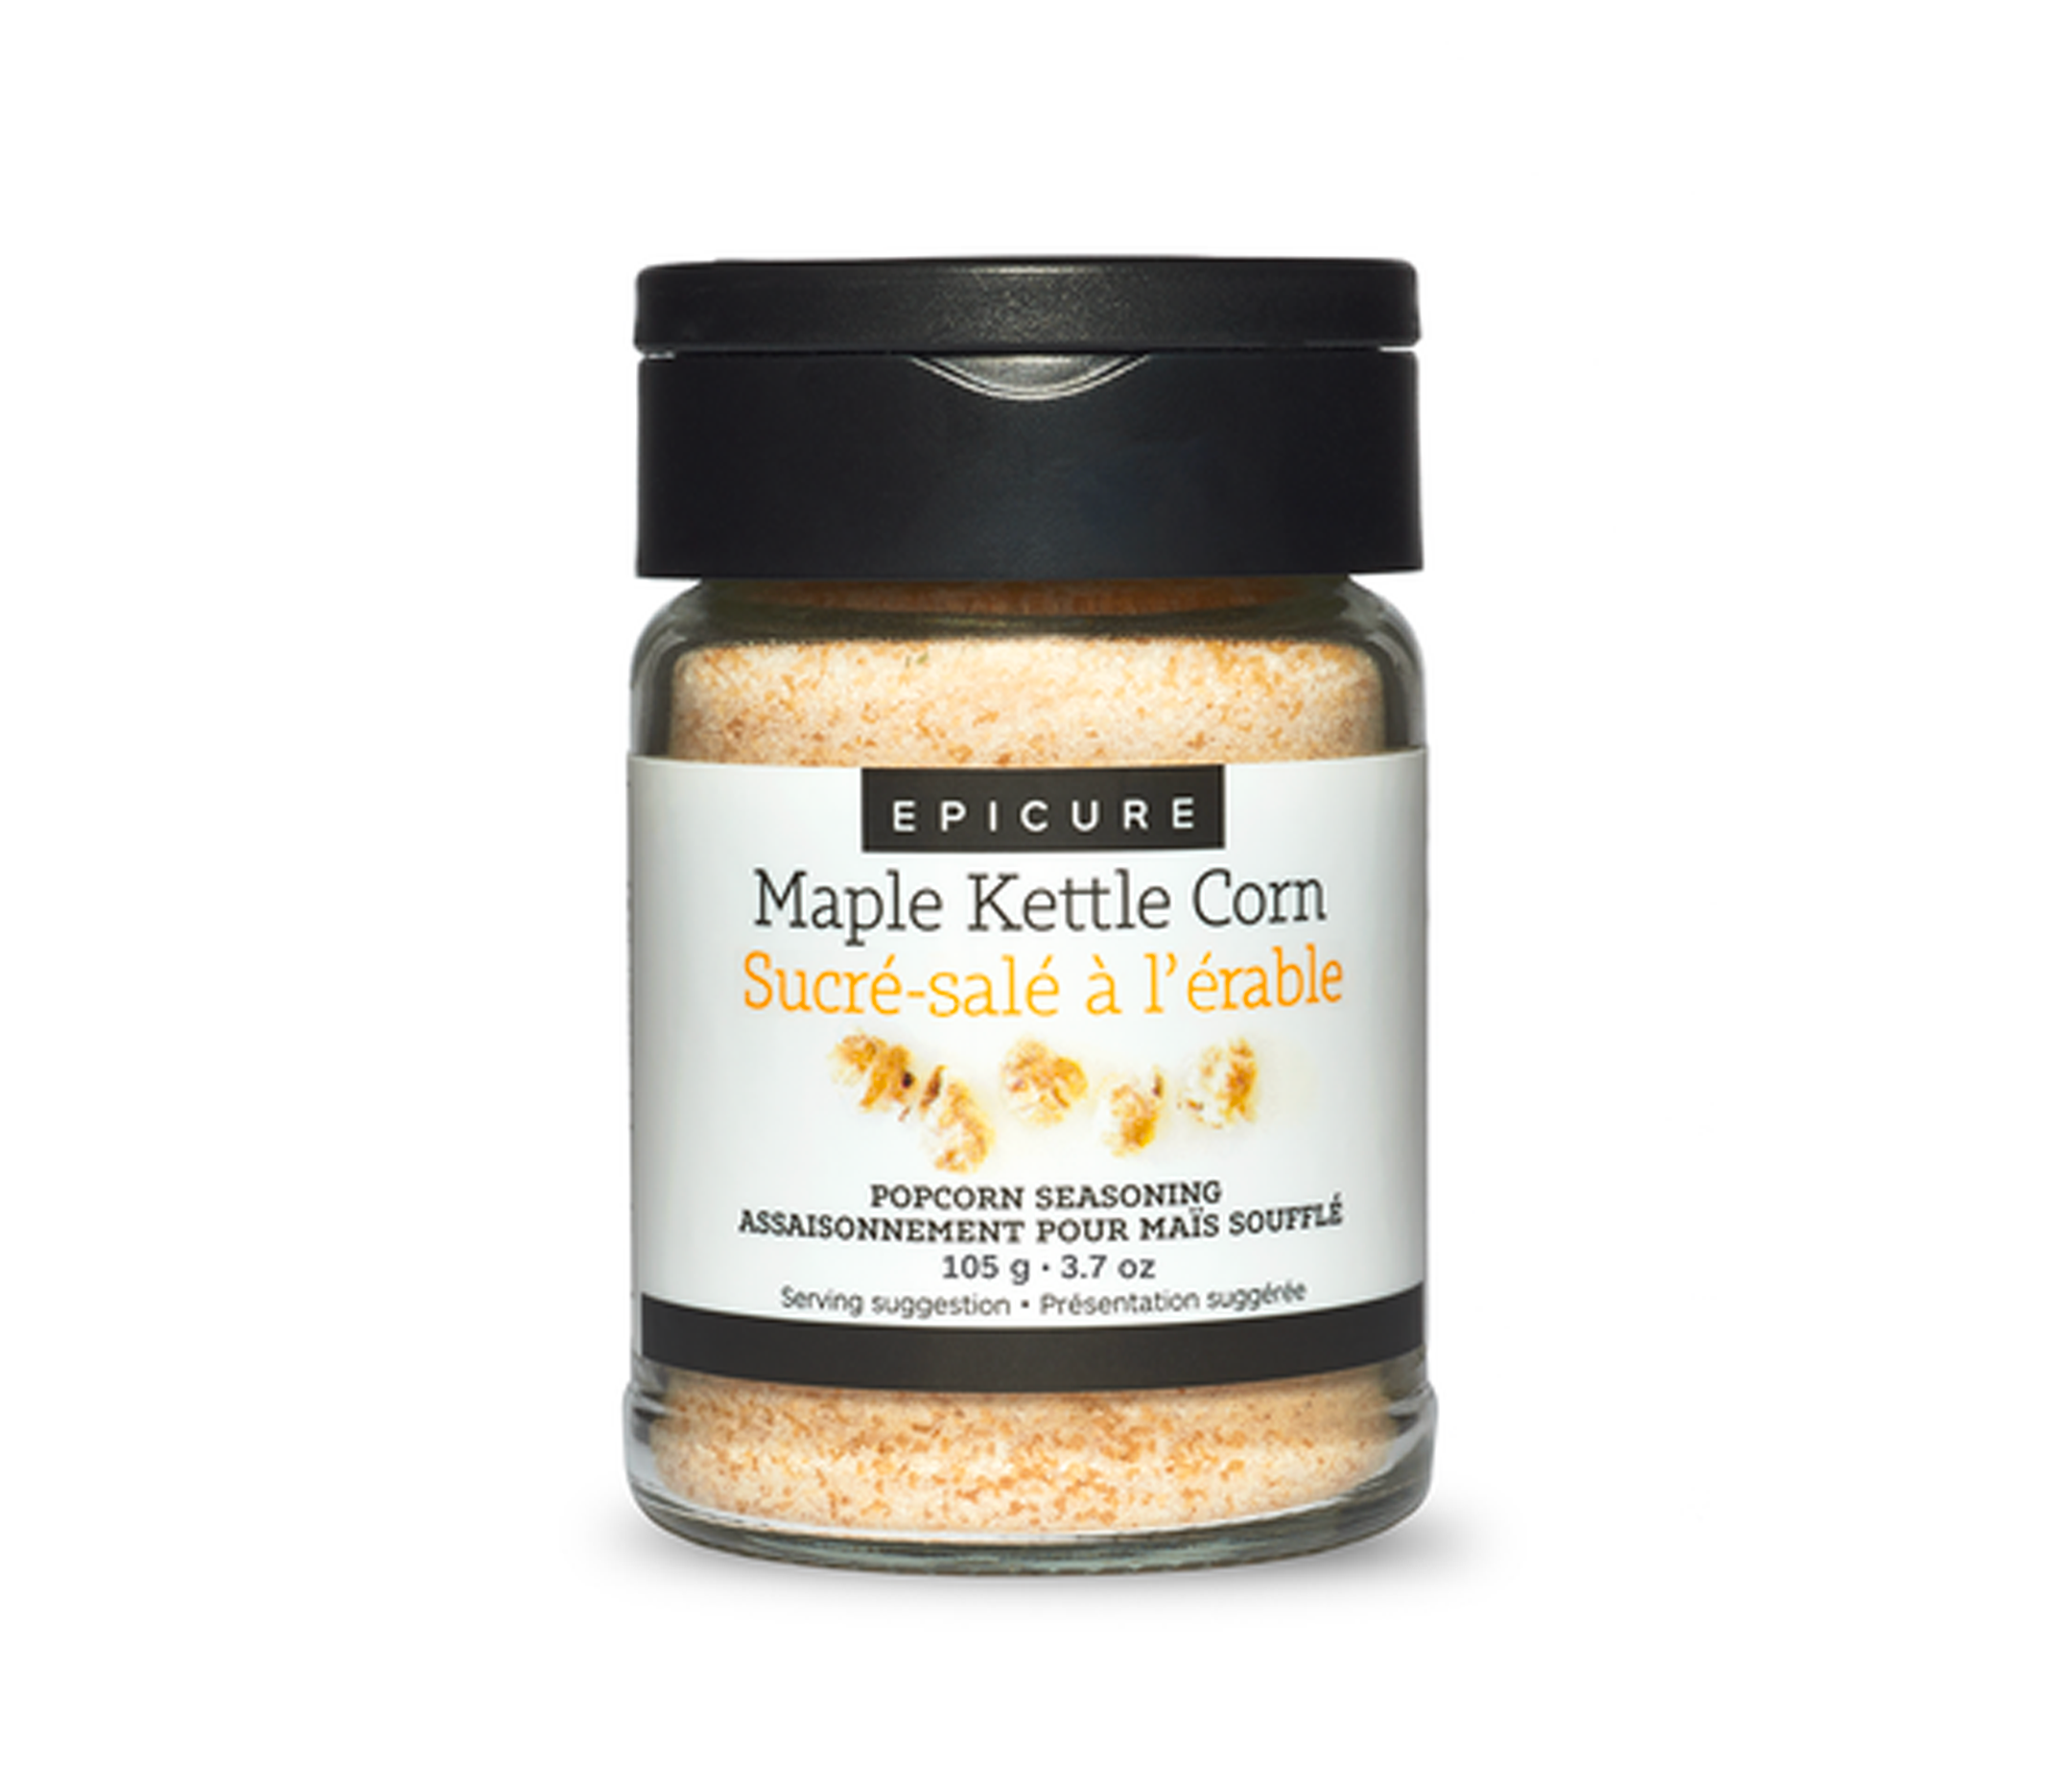 Maple Kettle Corn Popcorn Seasoning